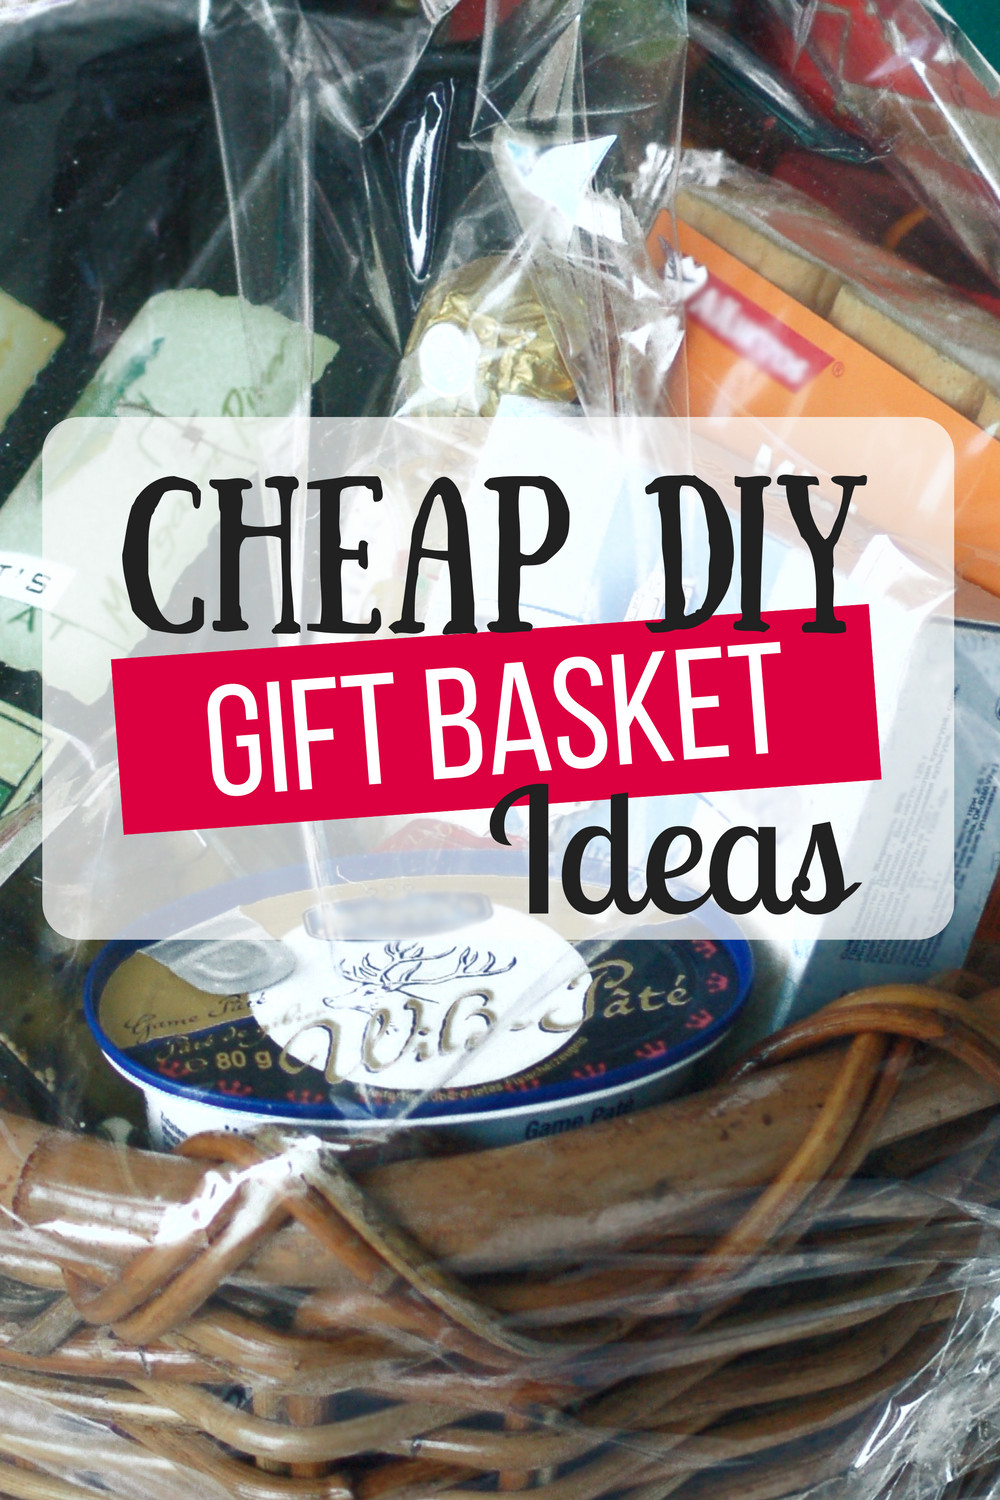 Homemade Fruit Basket Gift Ideas
 Cheap DIY Gift Baskets The Busy Bud er